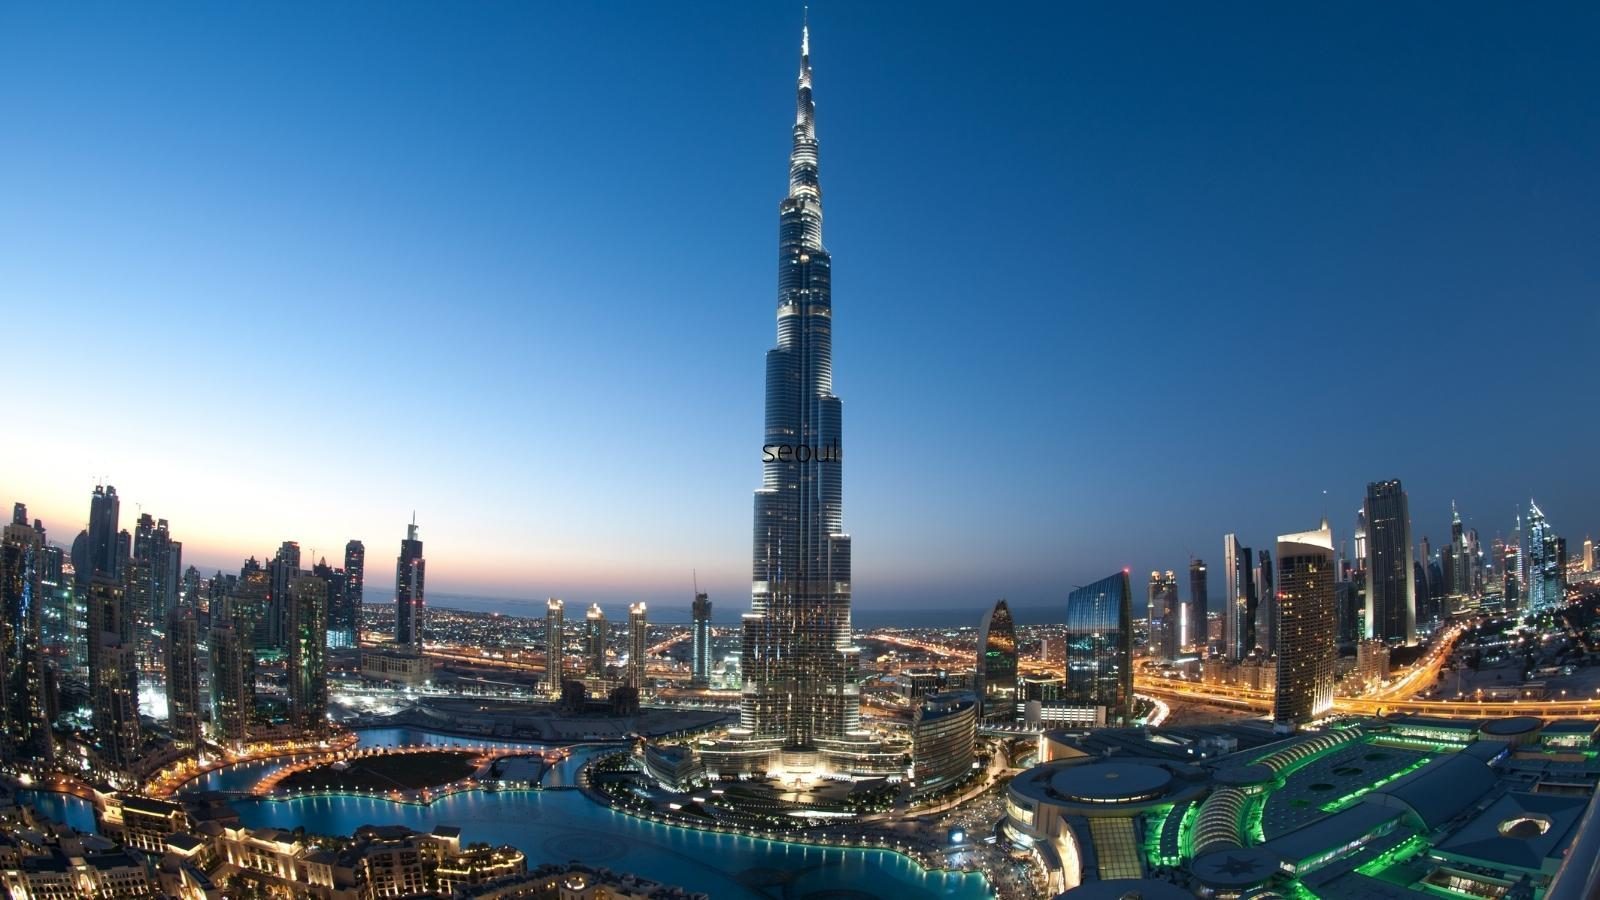 The tour Burj Khalifa